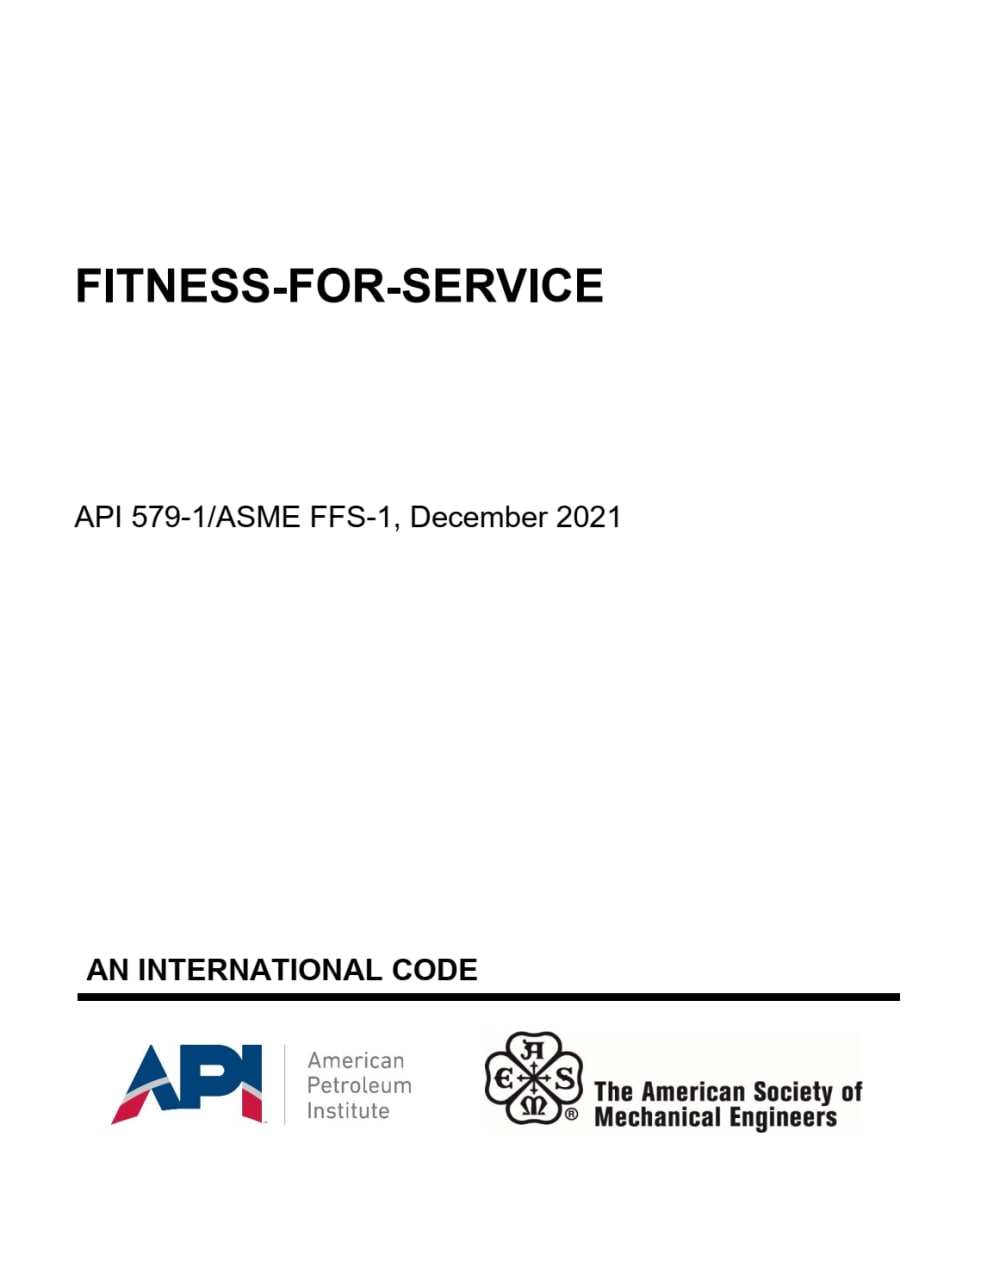 ❤️‍🔥استاندارد ASME FFS-1  ویرایش دسامبر 2021 ❤️‍🔥   ✏️❤️API 59-1 / ASME FFS-1 FITNESS-FOR-SERVICE 2021 Edition